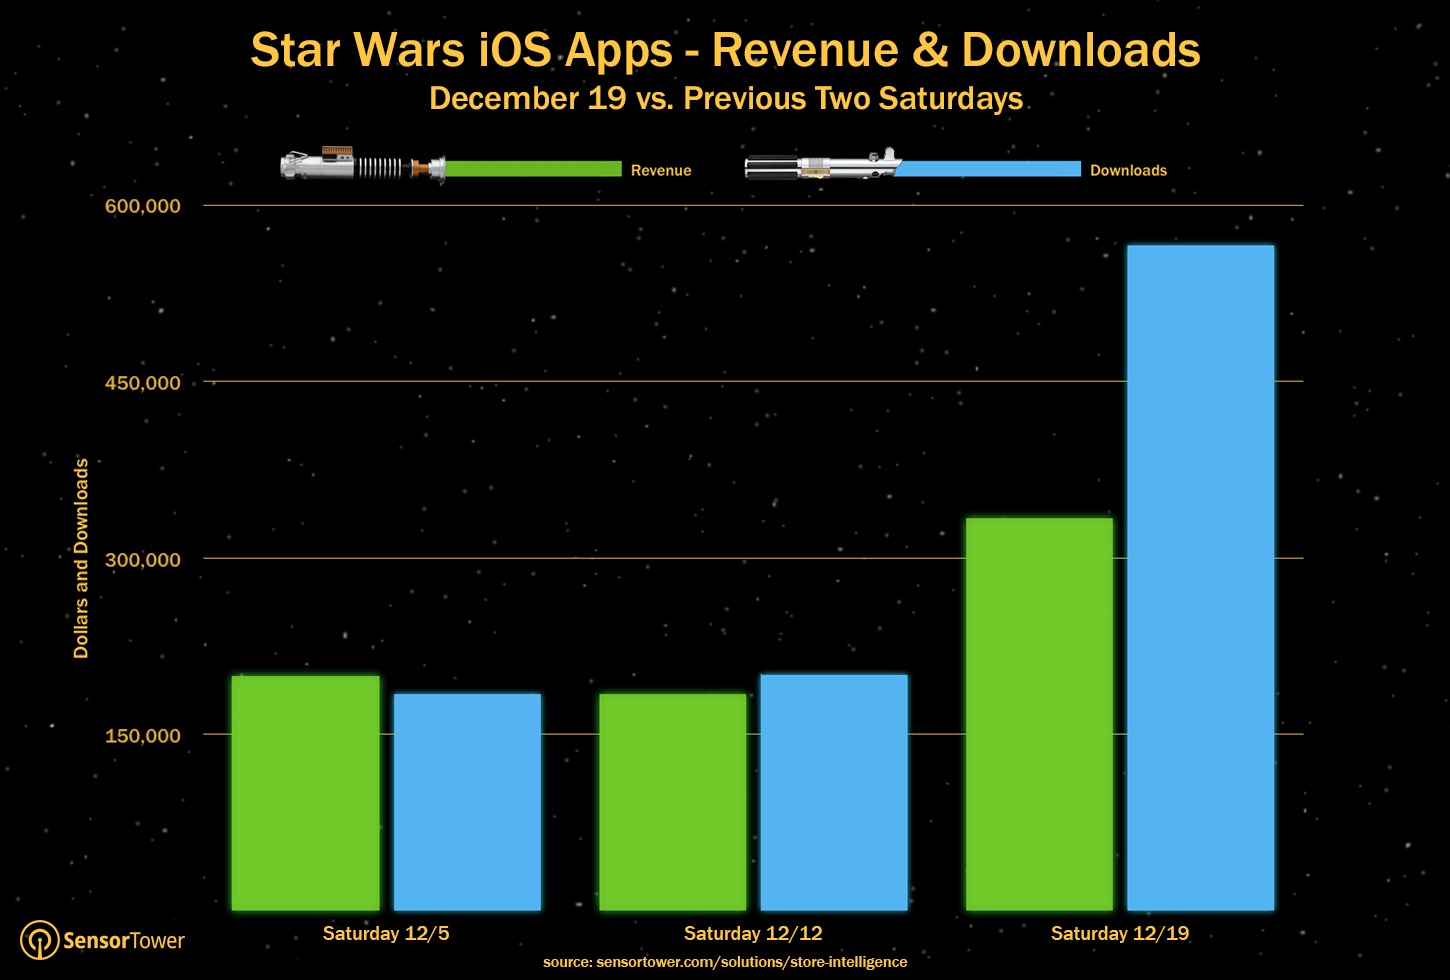 Star Wars Apps Revenue & Downloads - December 19